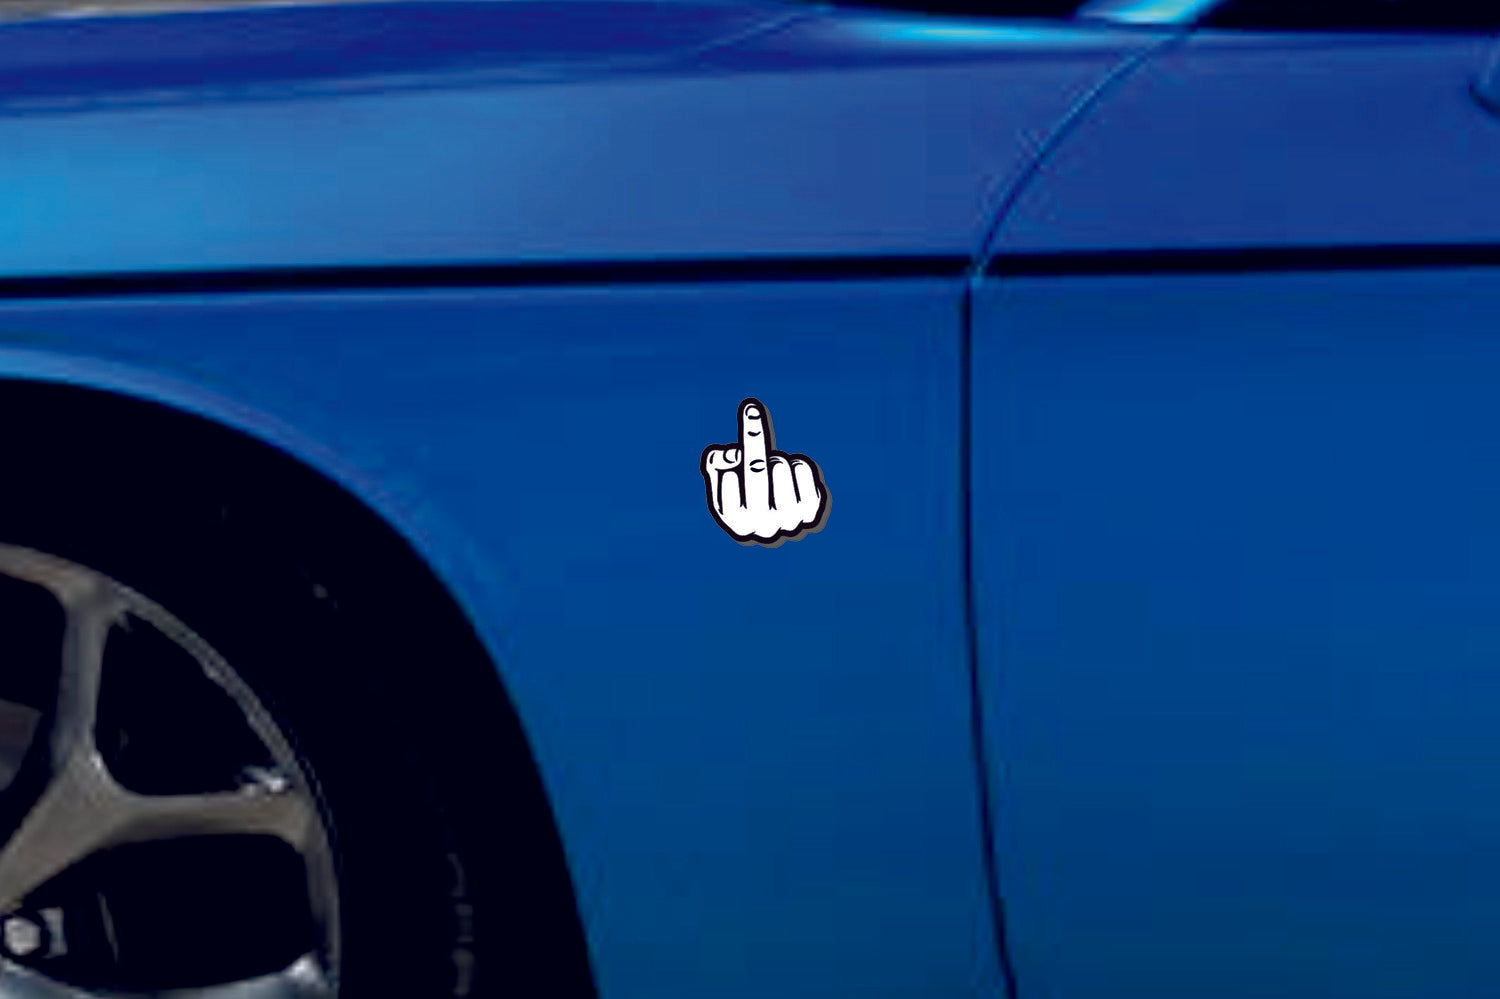 Car emblem badge for fenders with Fuck logo